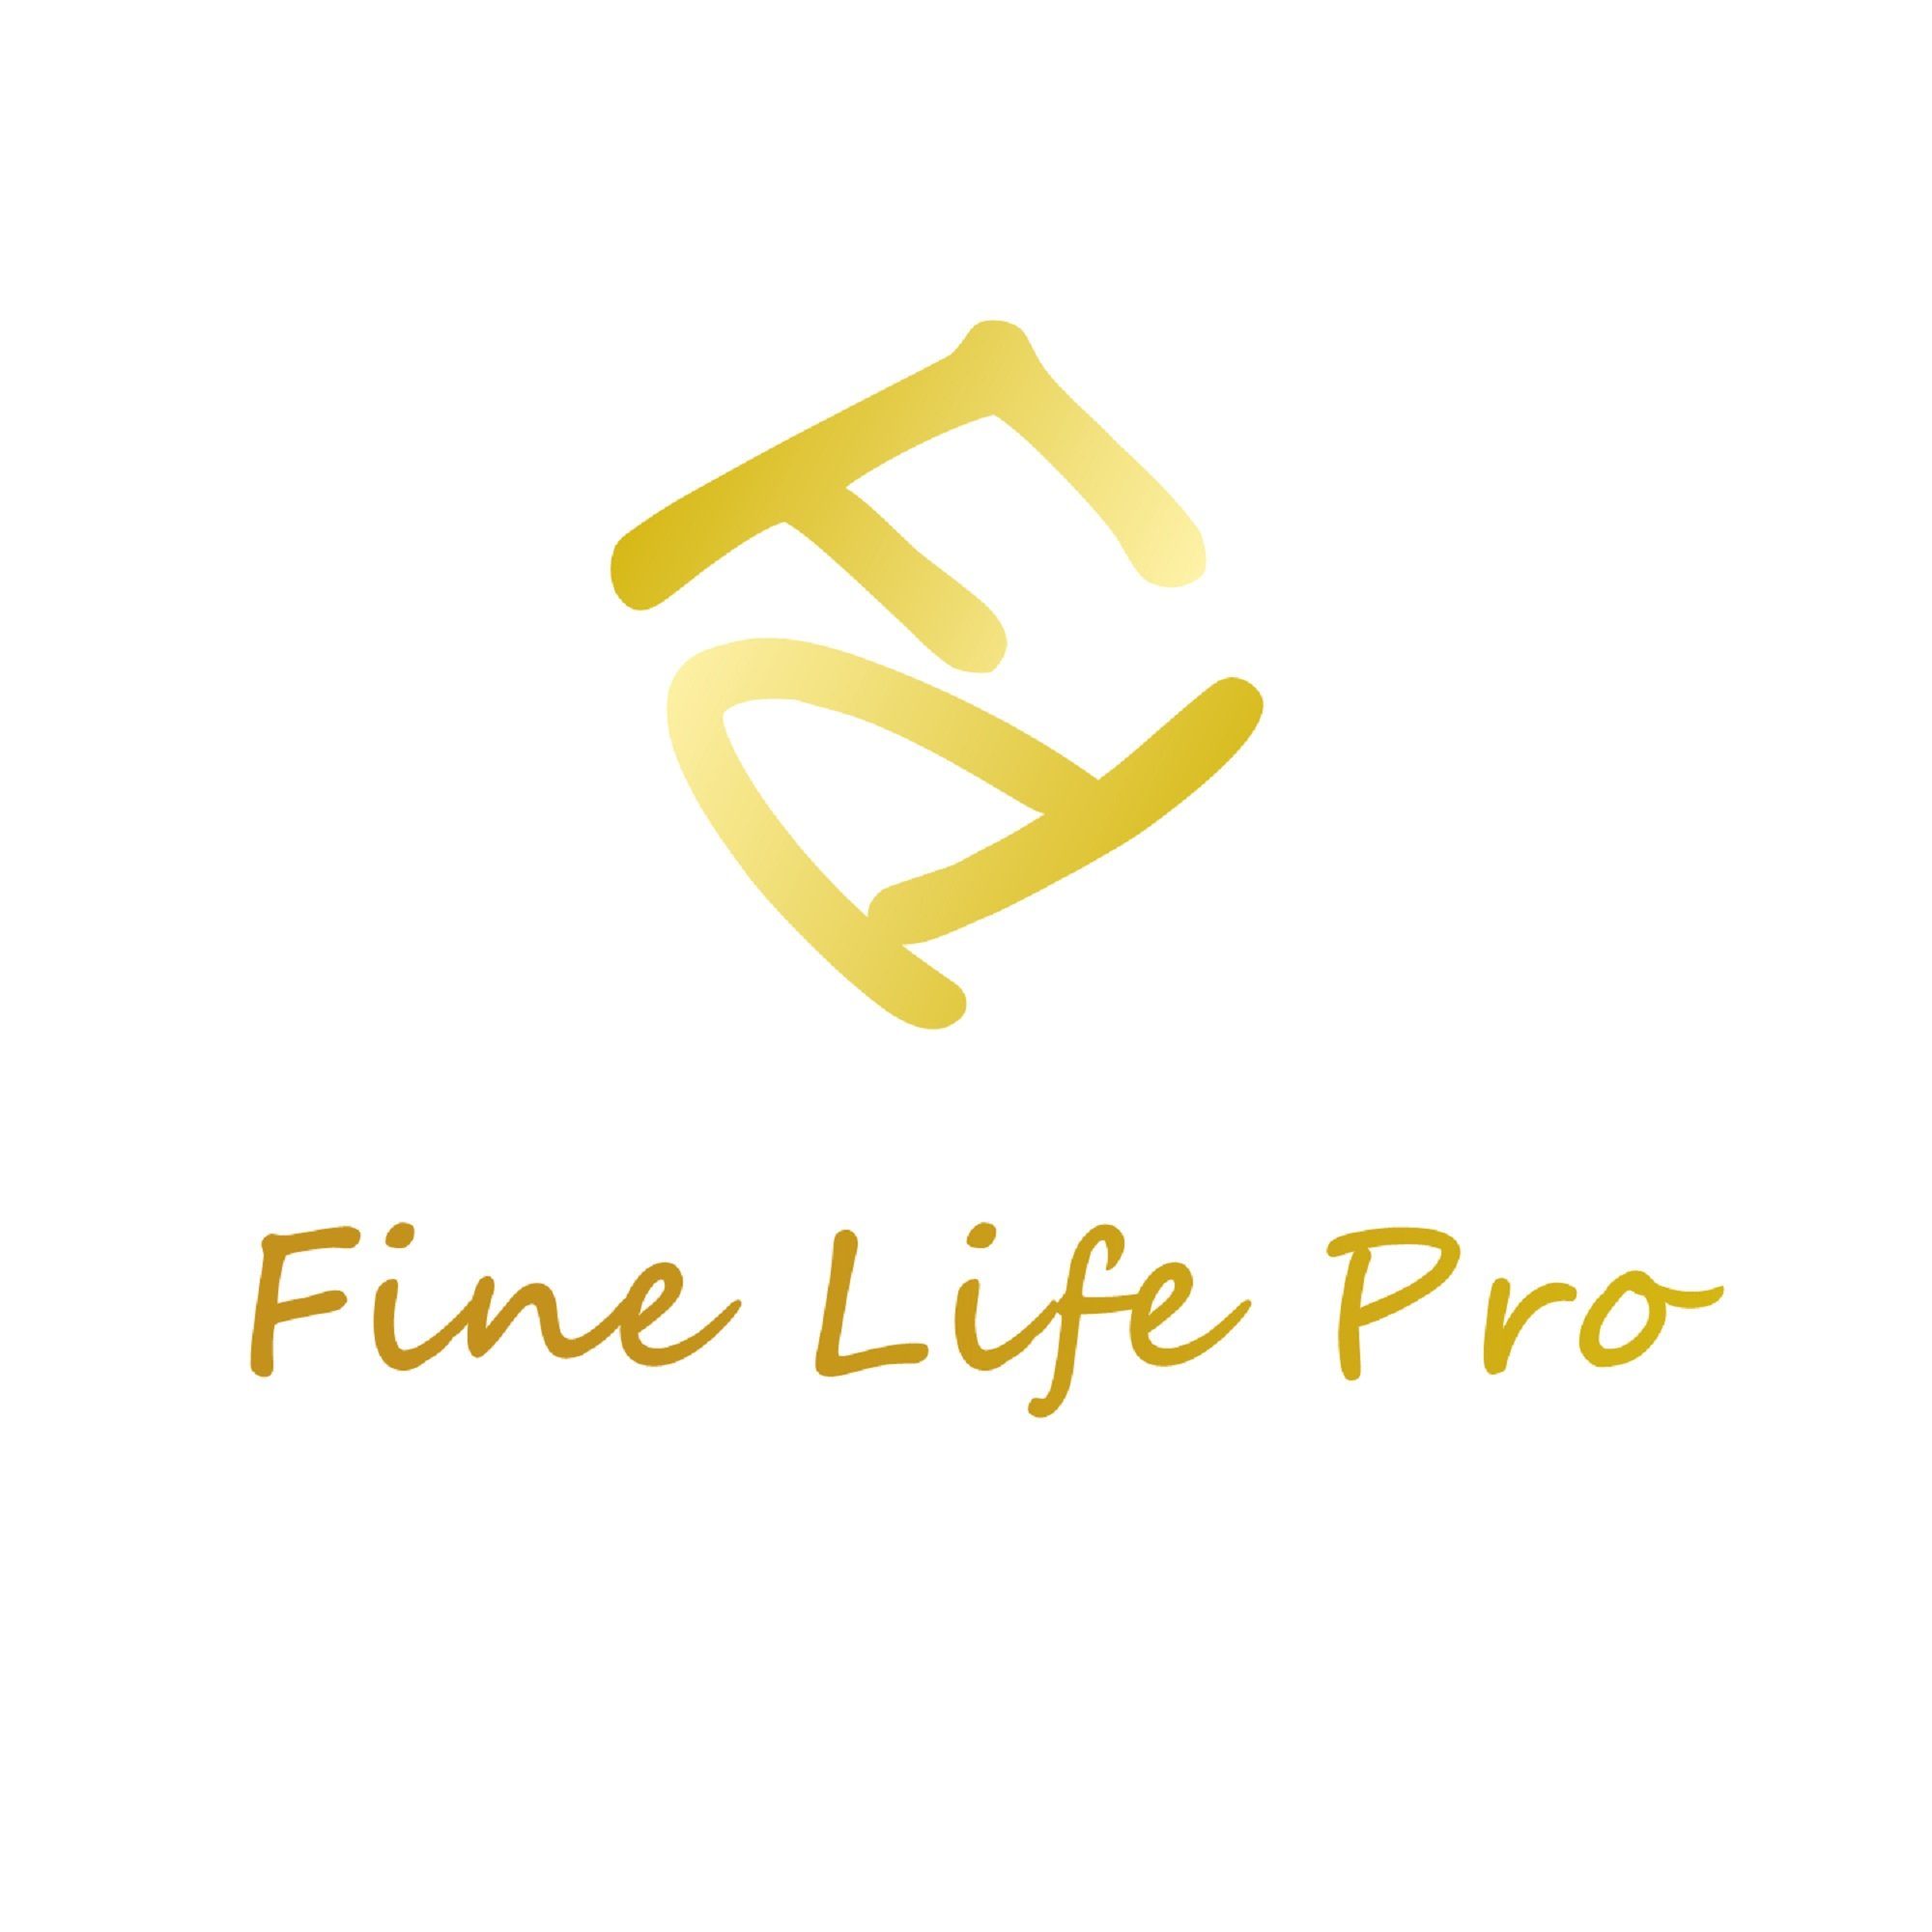 Fine Life Pro